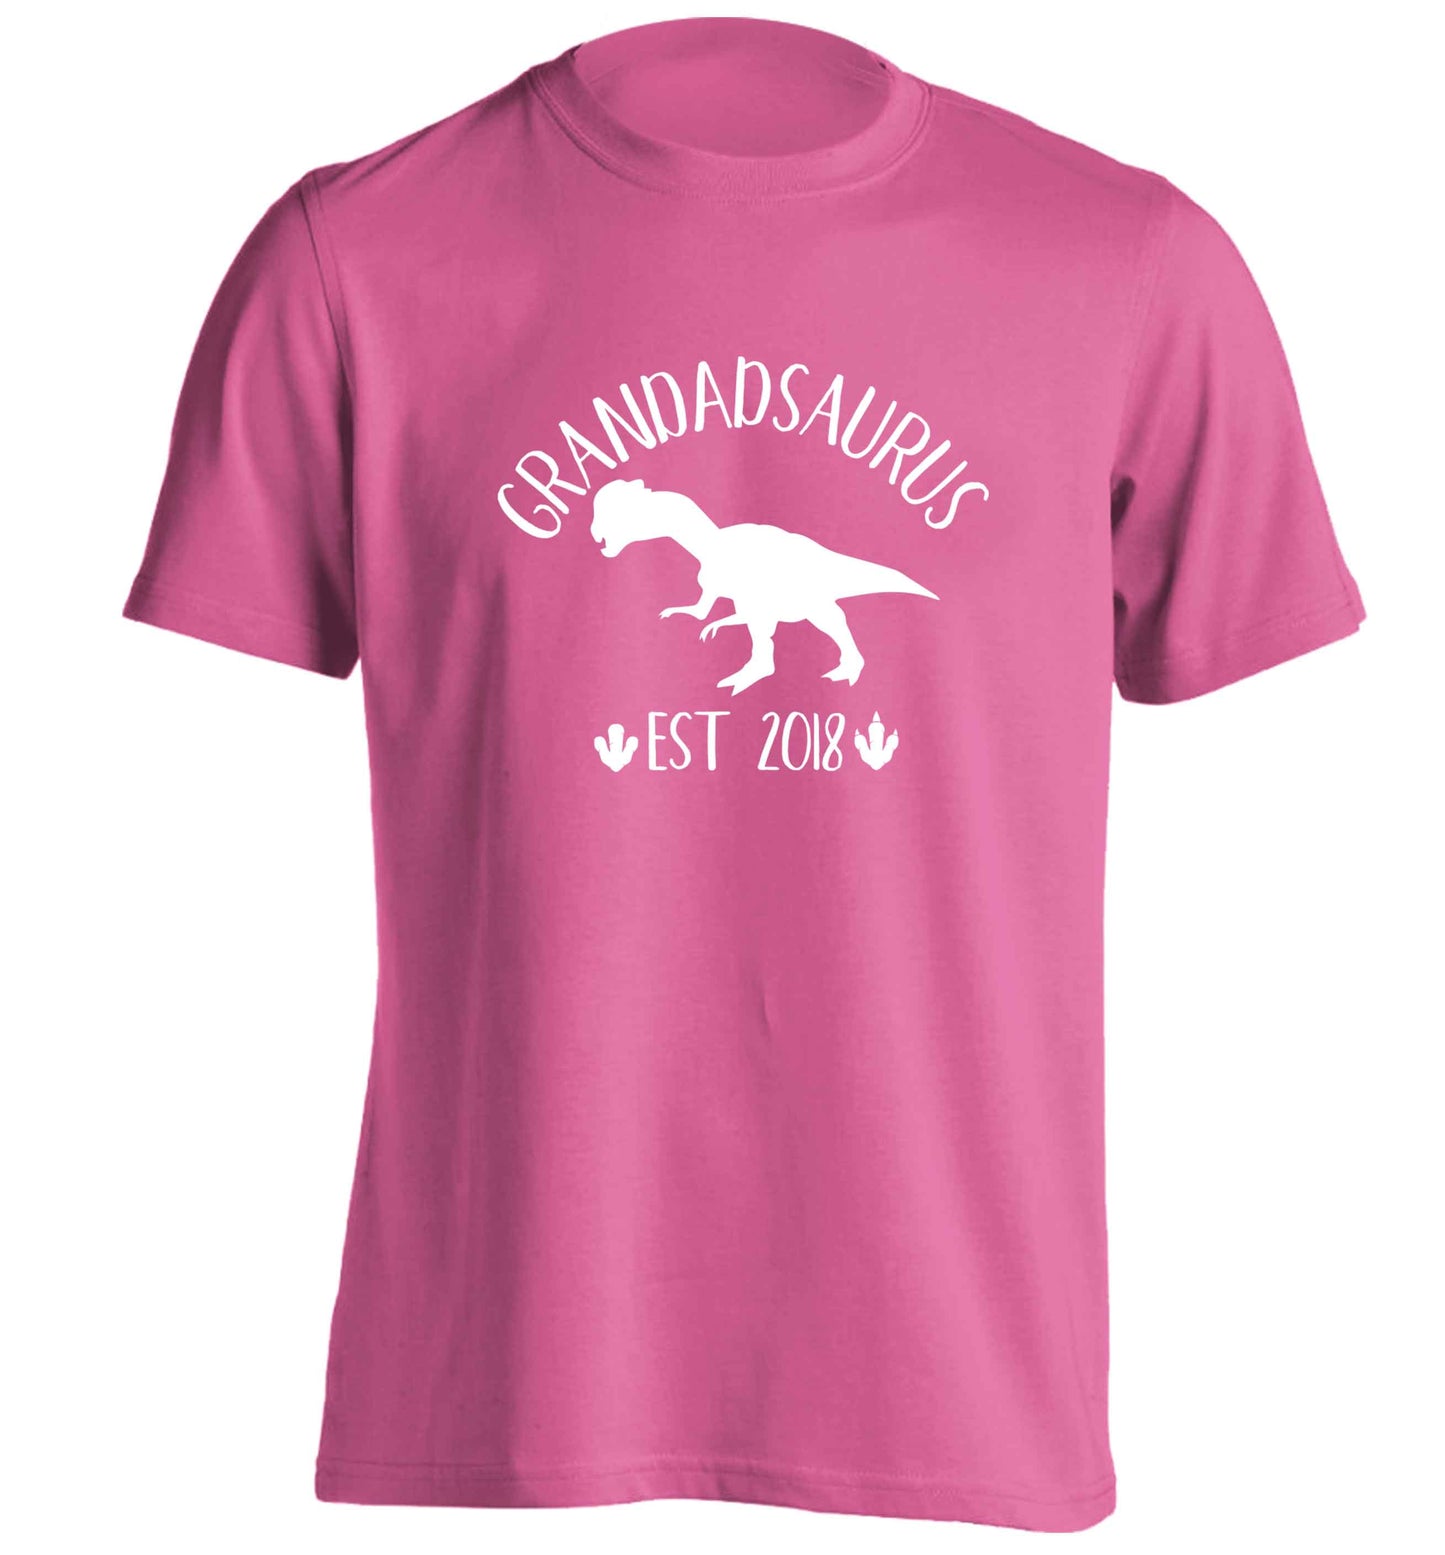 Personalised grandadsaurus since (custom date) adults unisex pink Tshirt 2XL